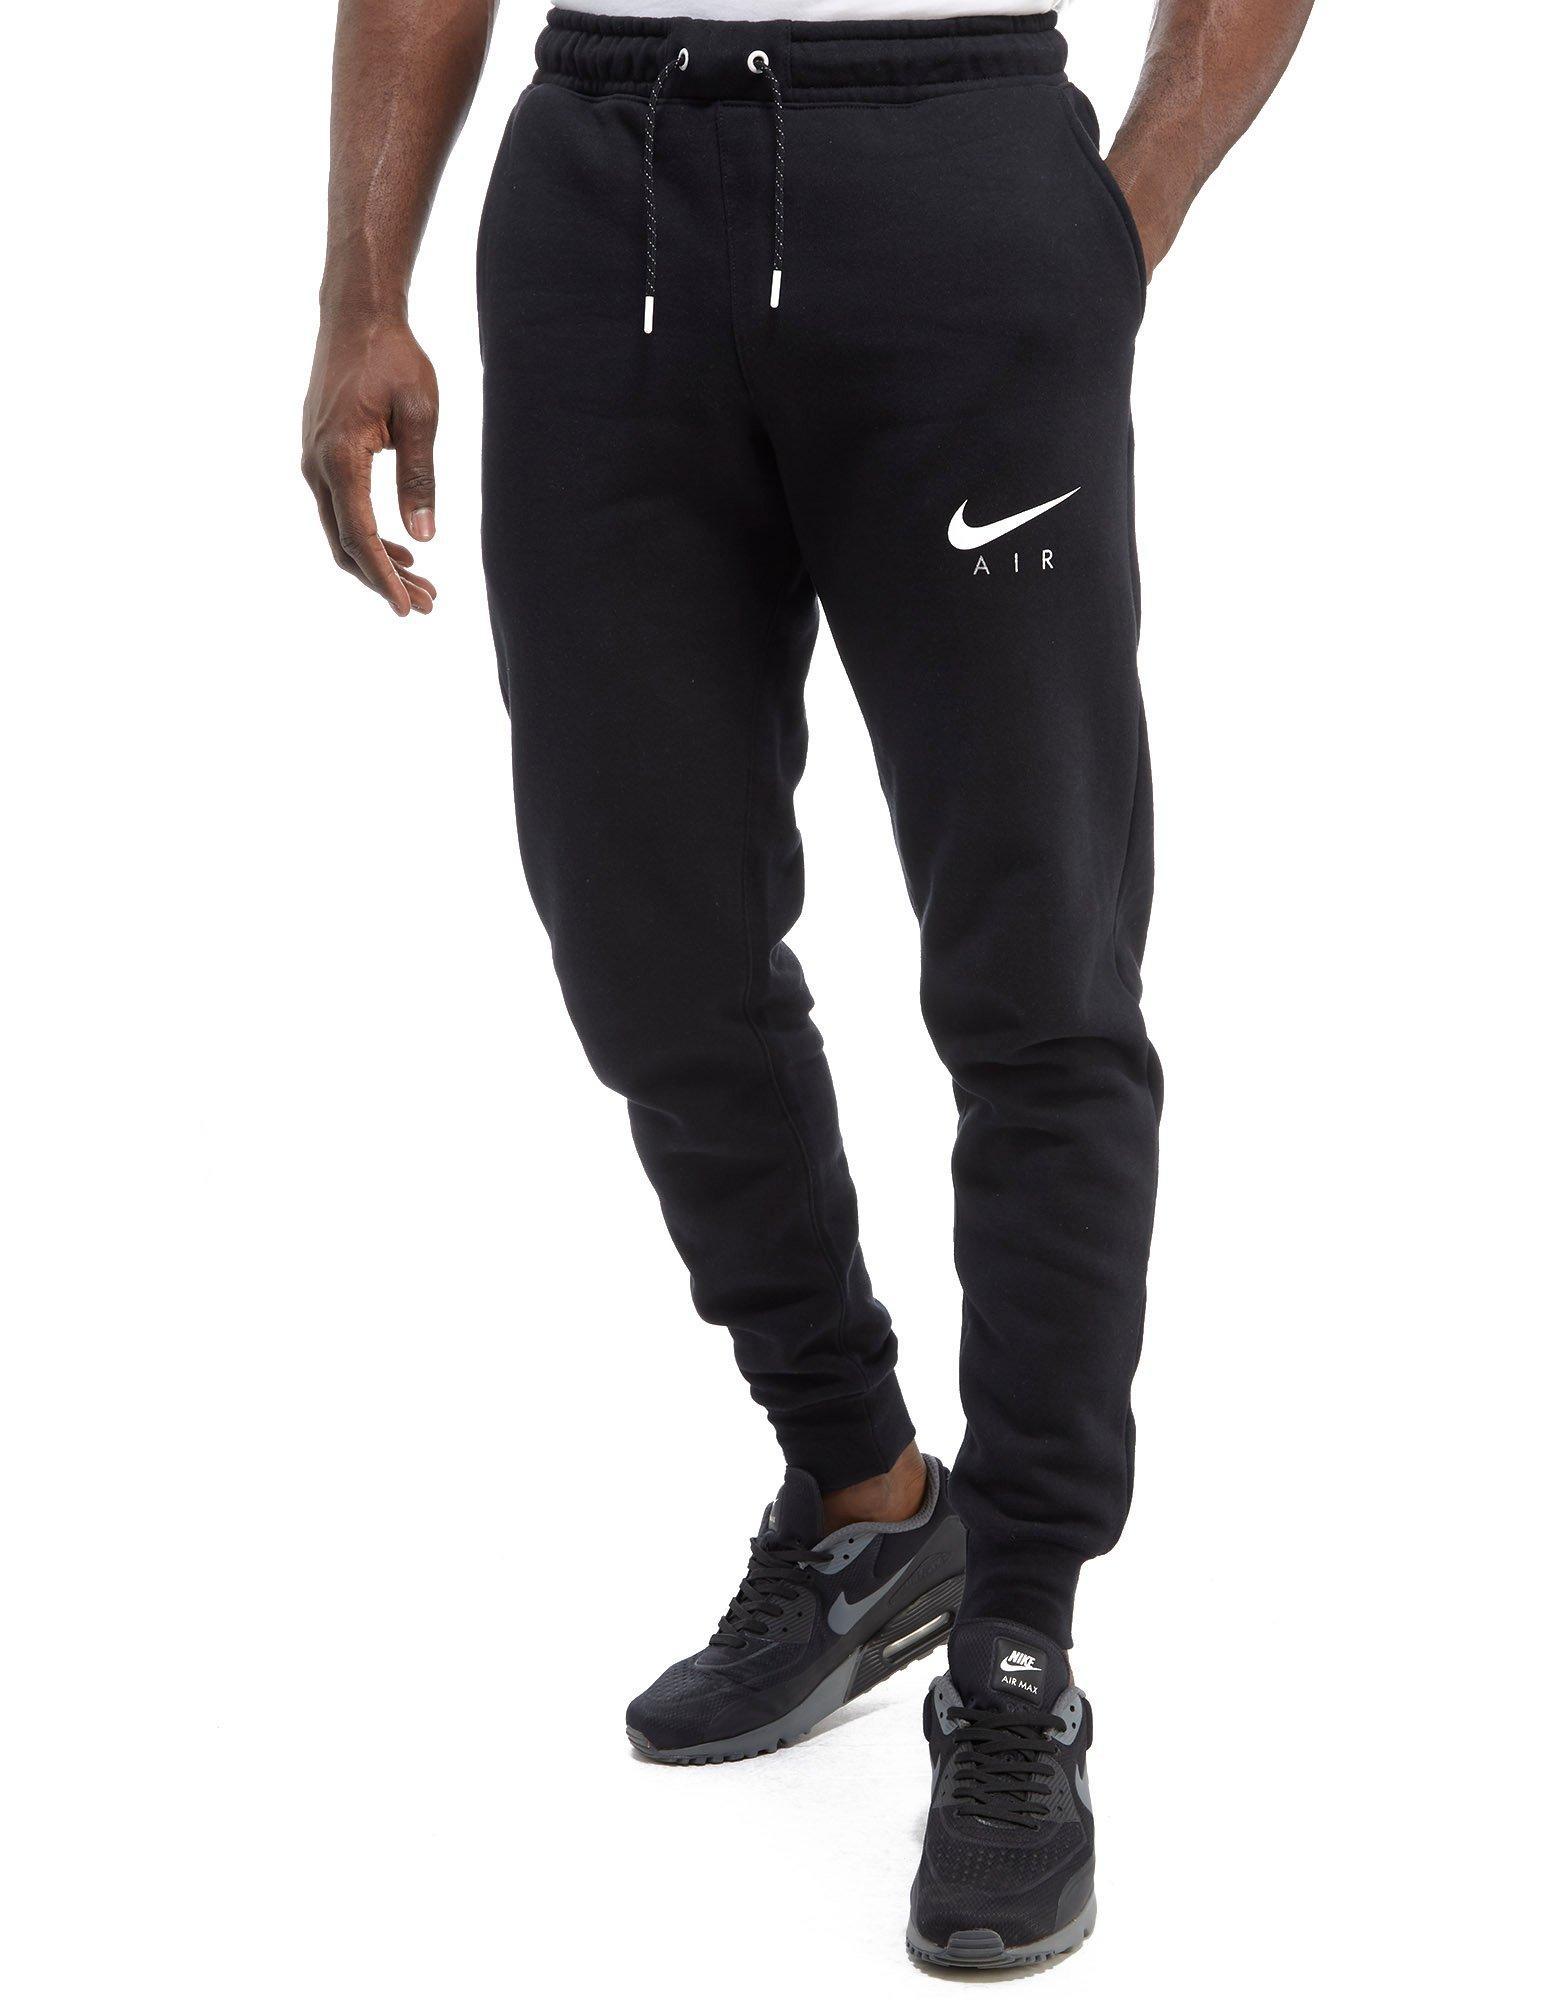 Nike Cotton Air Hybrid Jogging Pants in Black/White (Black) for Men - Lyst